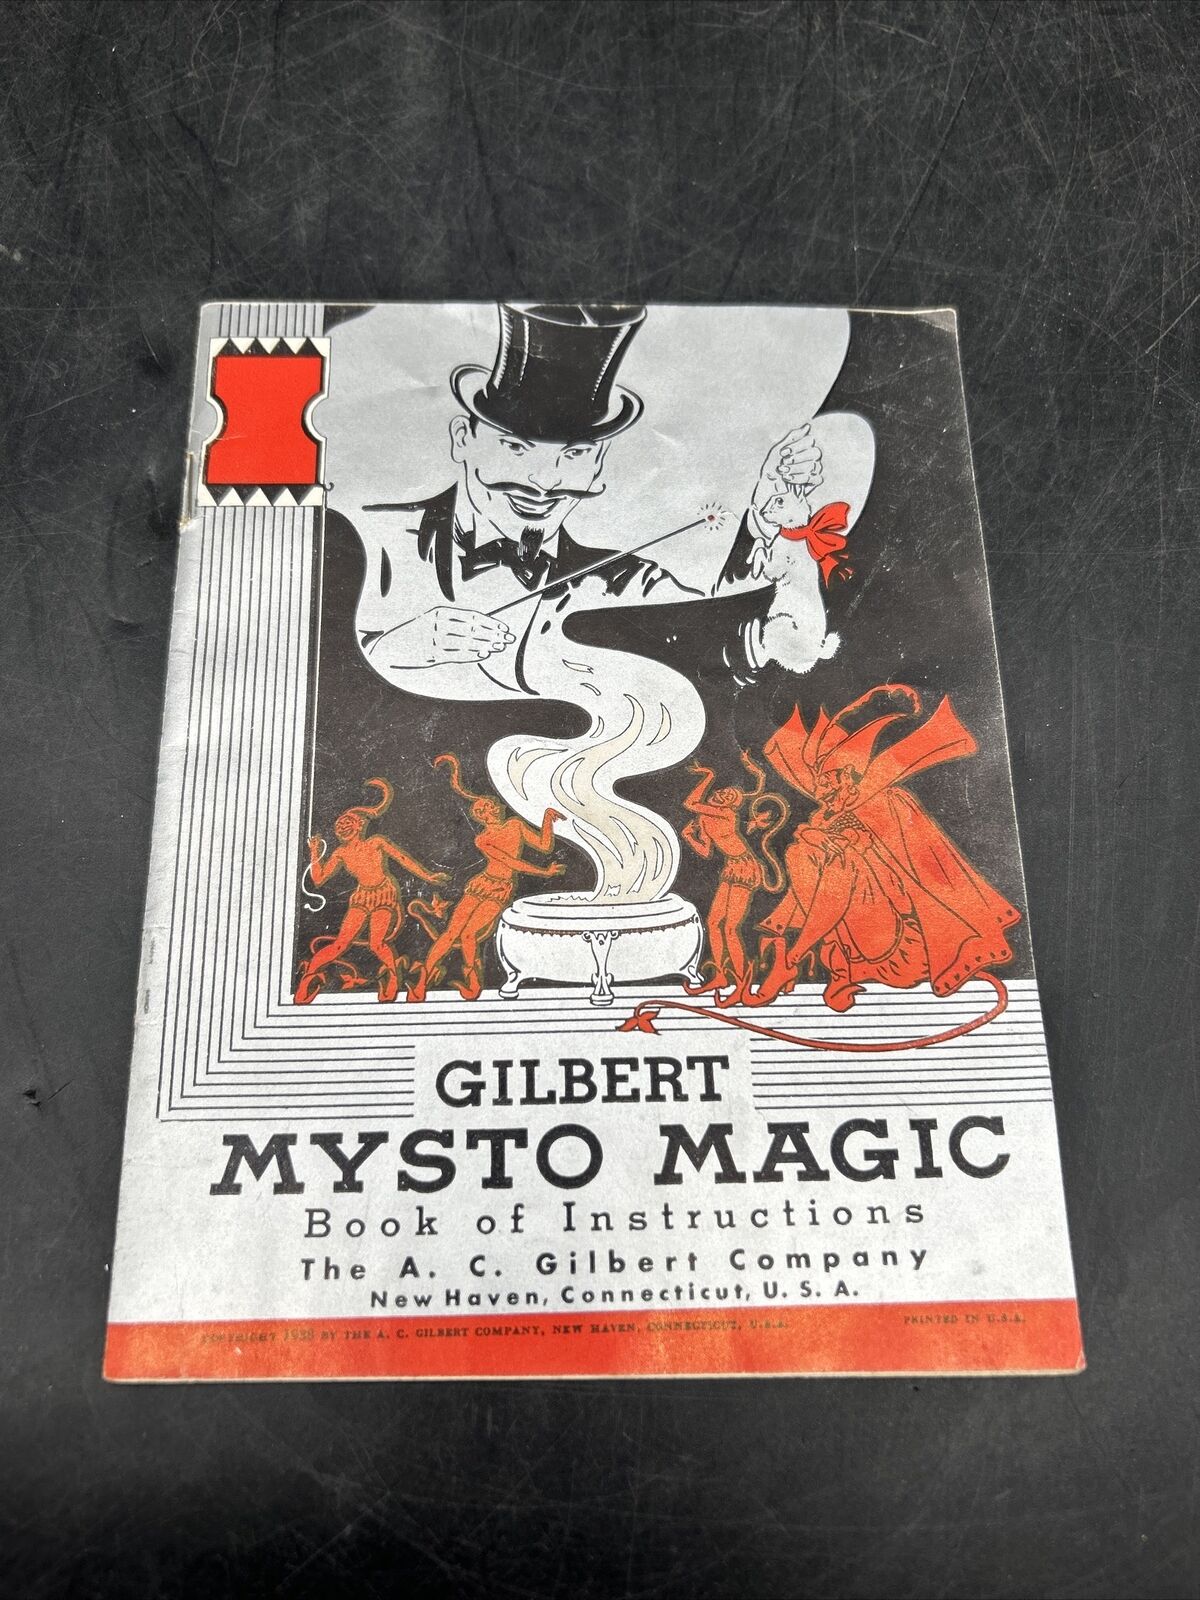 Gilbert Mysto Magic Book of Instructions - 1938